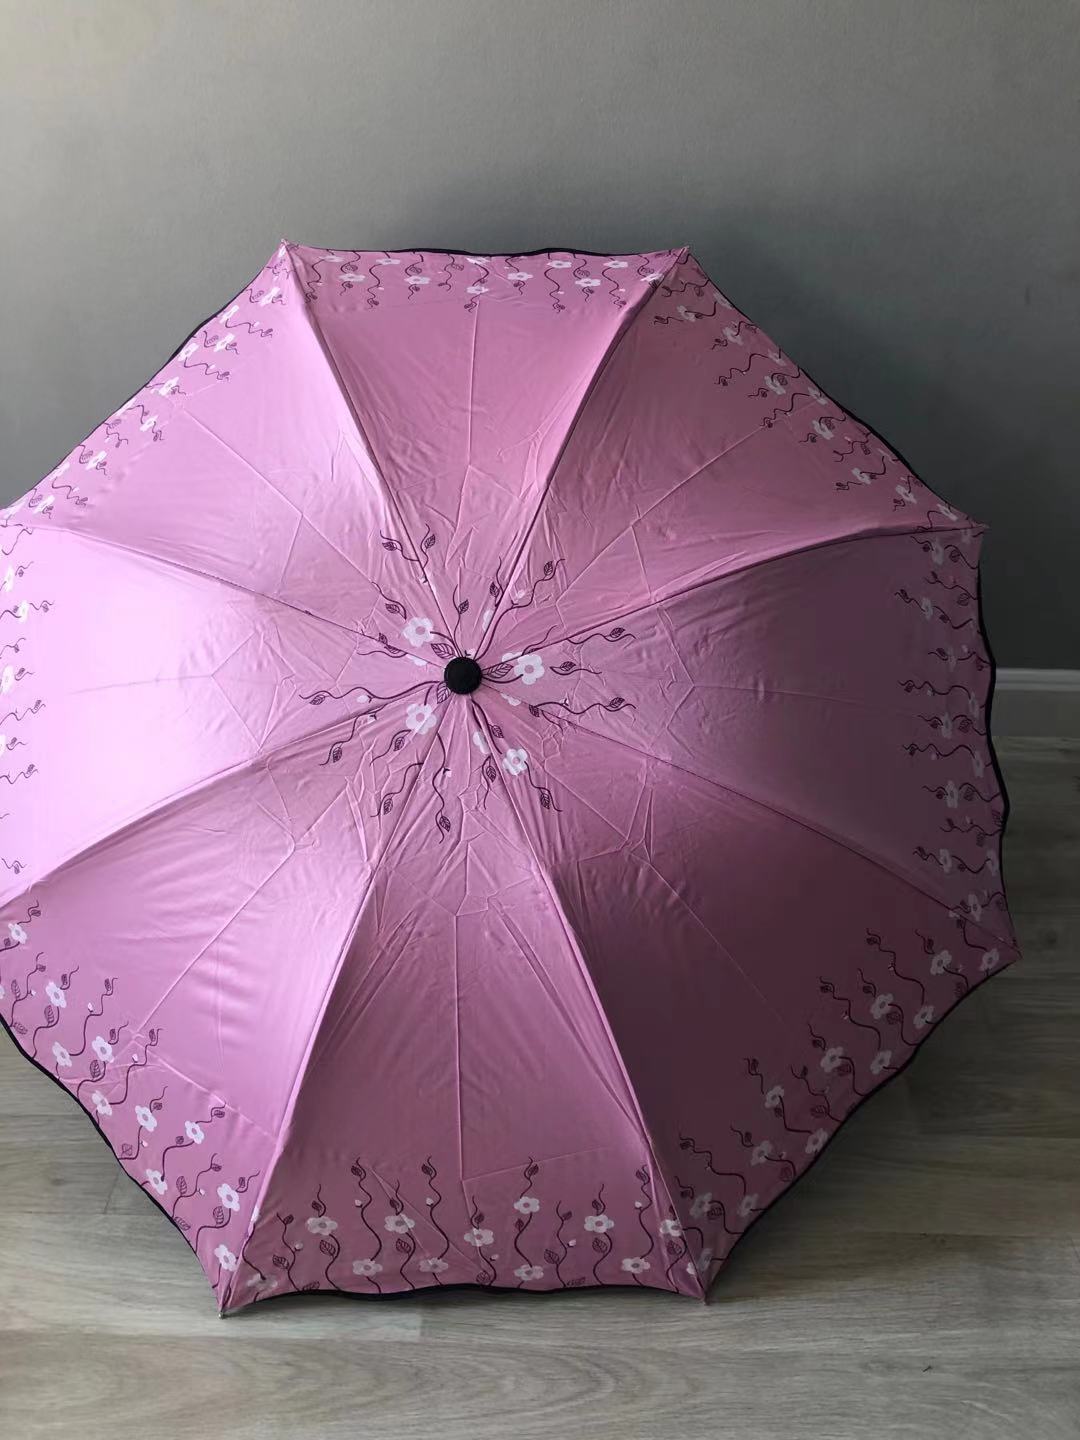 UV Umbrella birdฝน ร่มกันแดด ร่มกันยูวี ร่มพับได้ ร่มแคปซูล ร่มแฟชั่น พกพาง่าย น้ำหนักเบา มีให้เลือกหลายแบบ